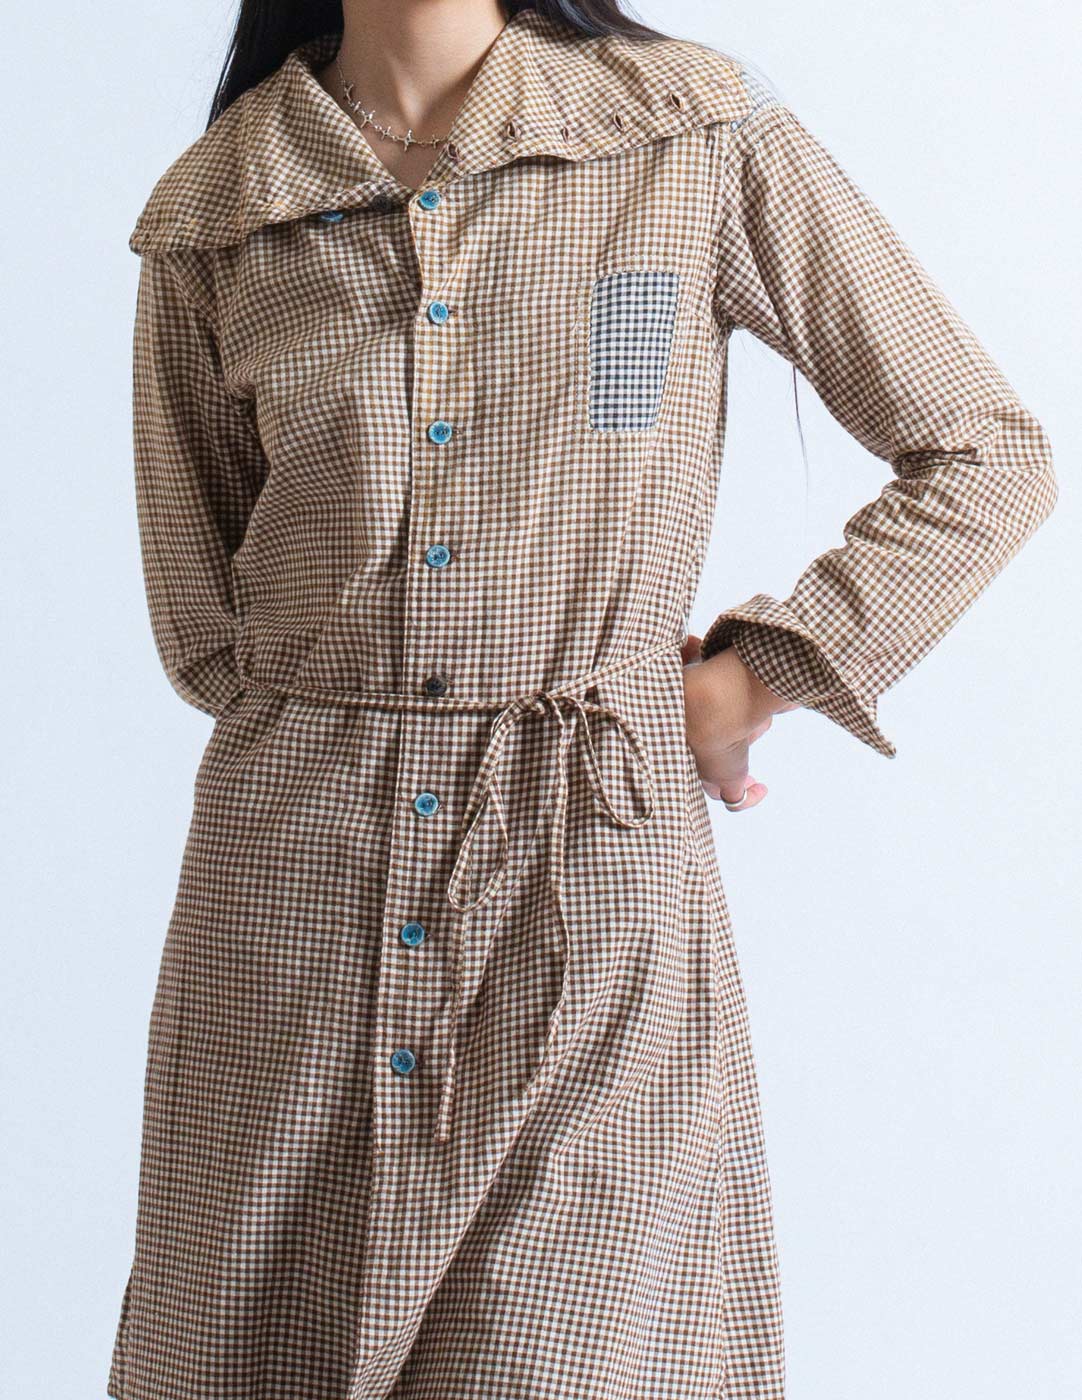 Kapital brown gingham shirt dress with patchwork detail